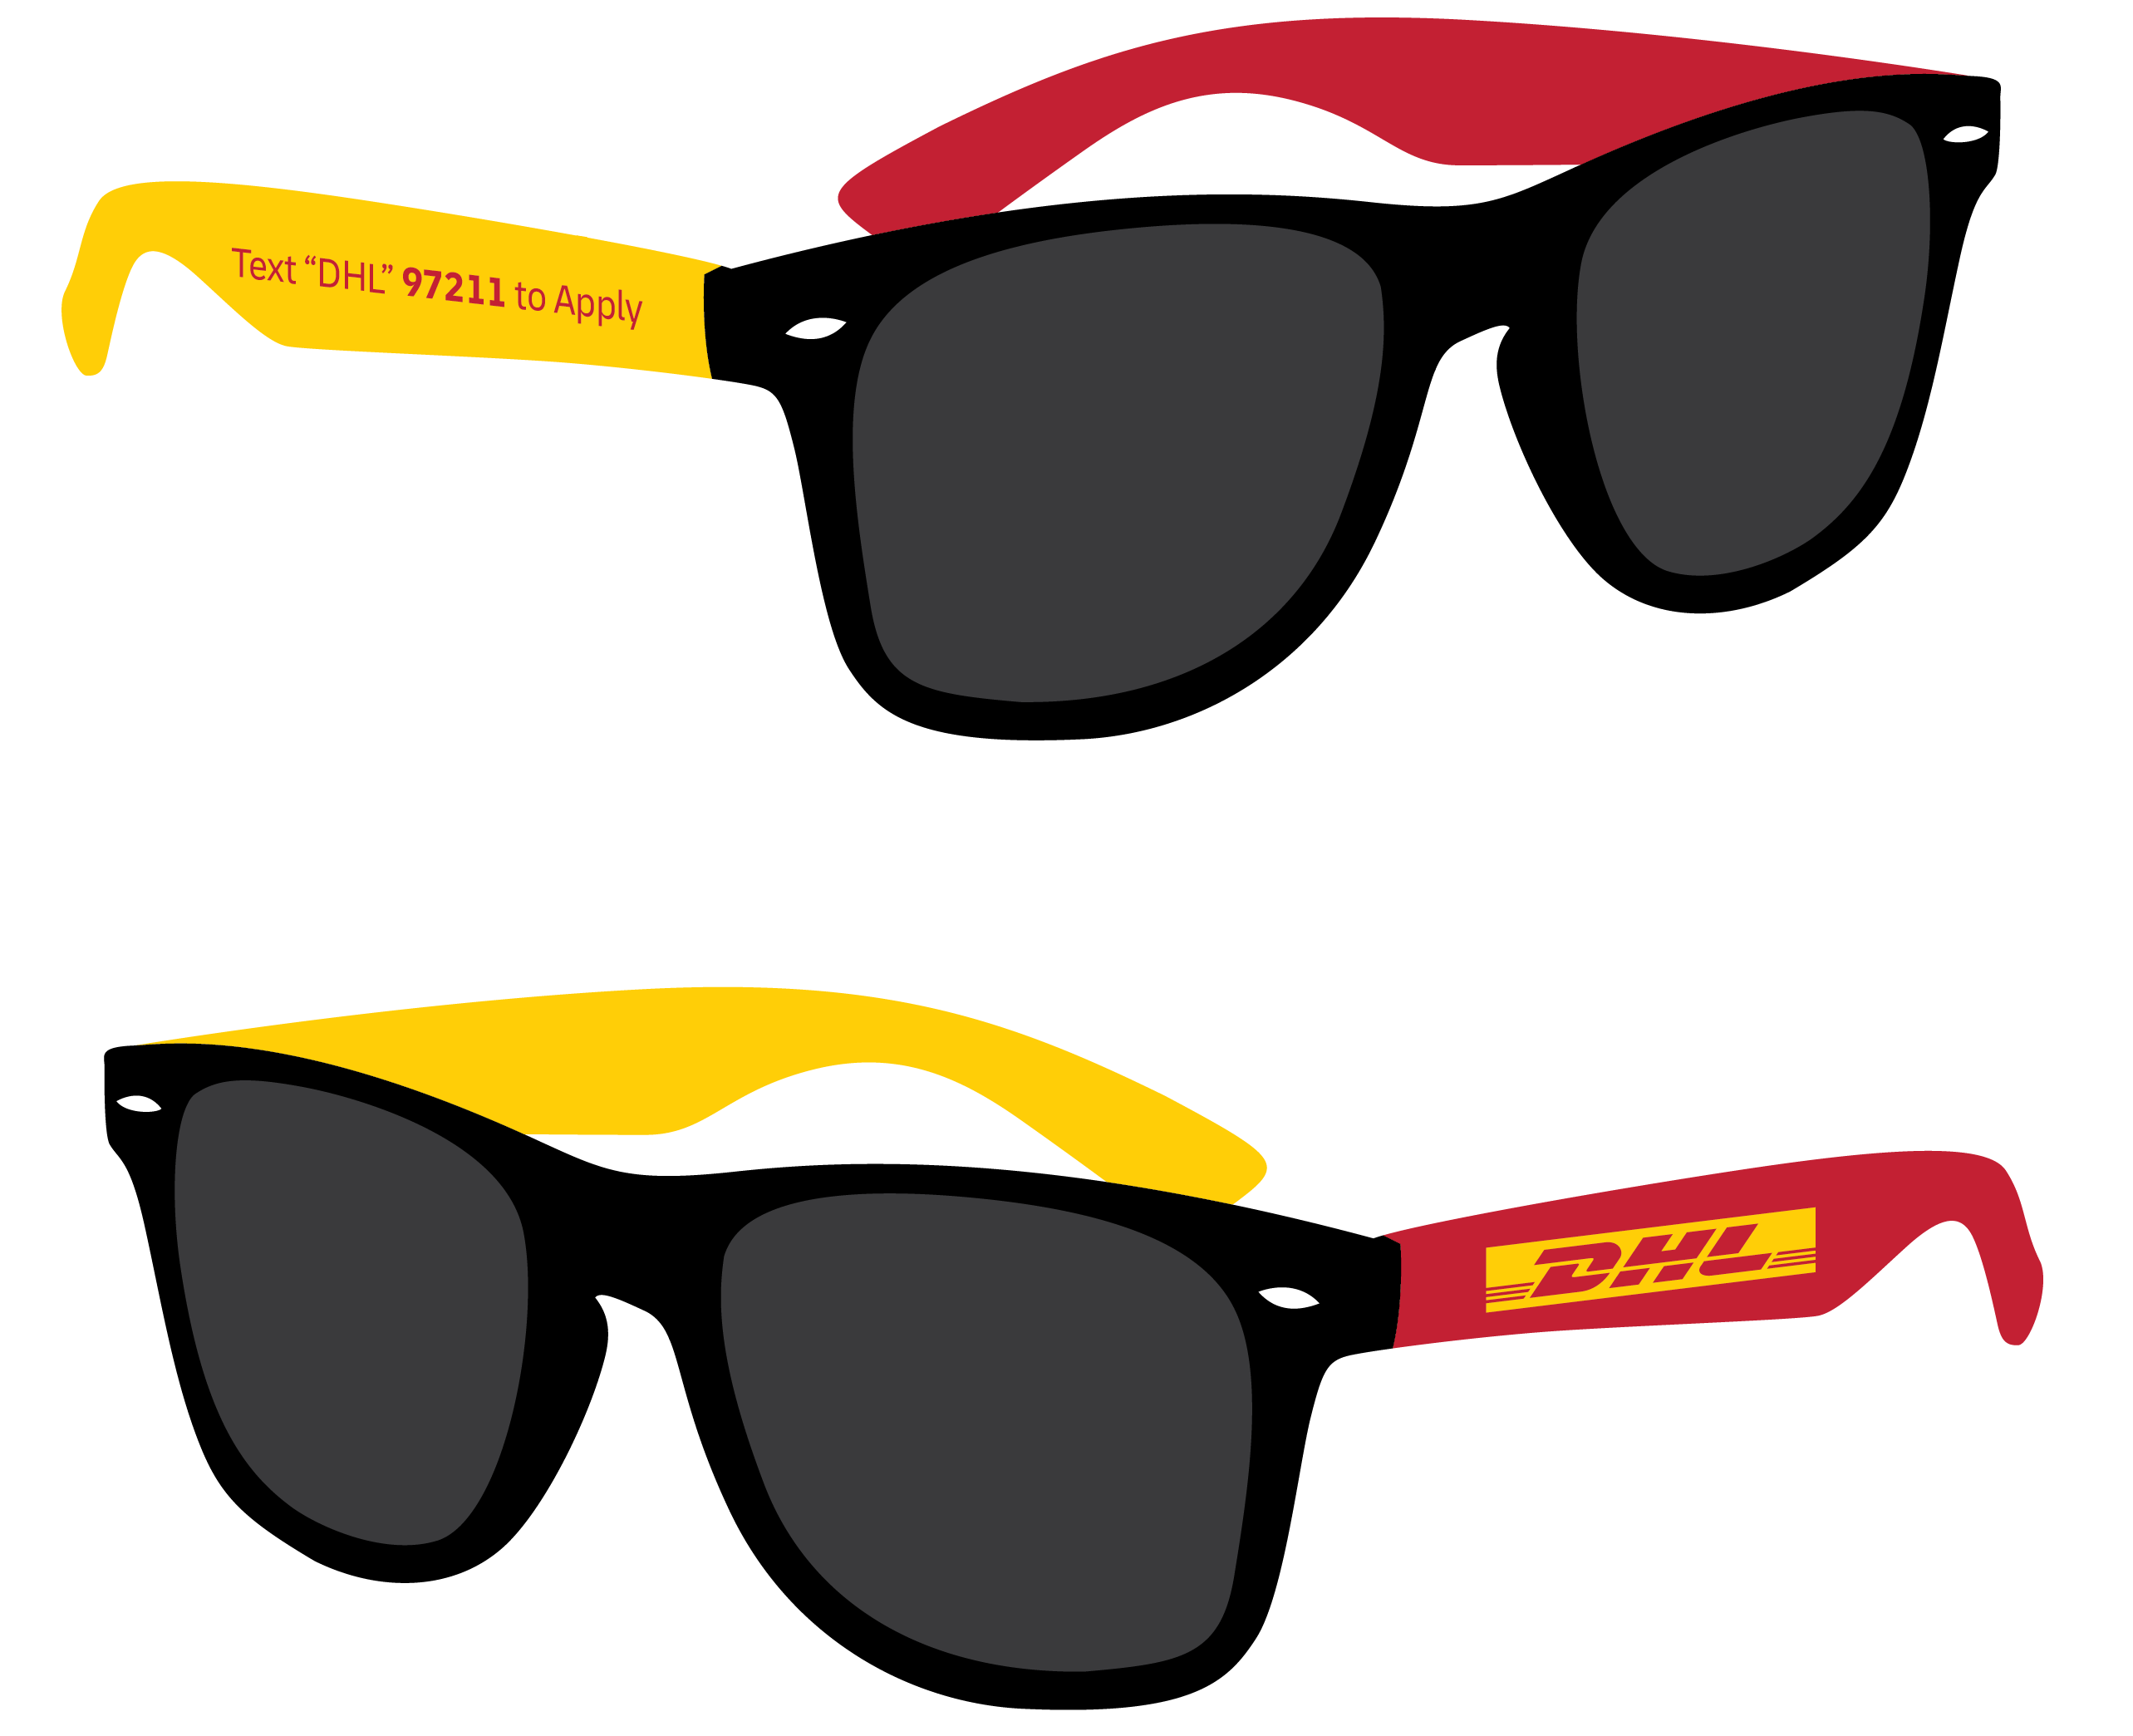 Full Custom DHL sunglasses.